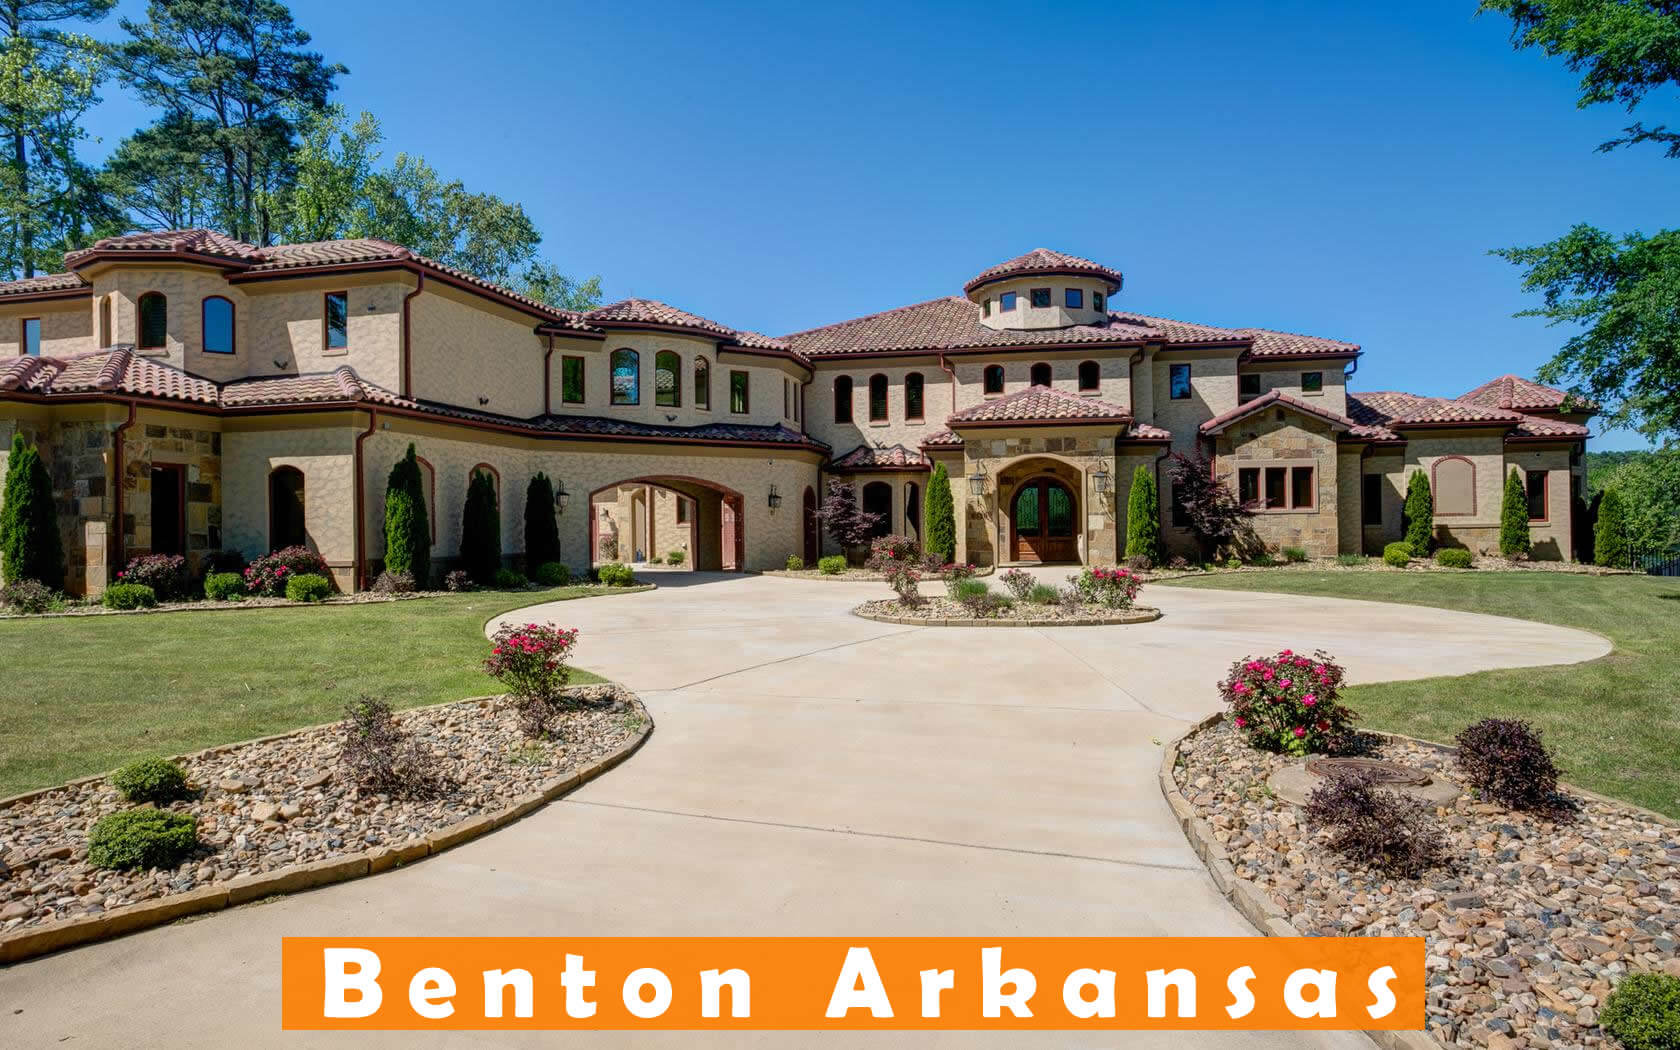 Benton Arkansas